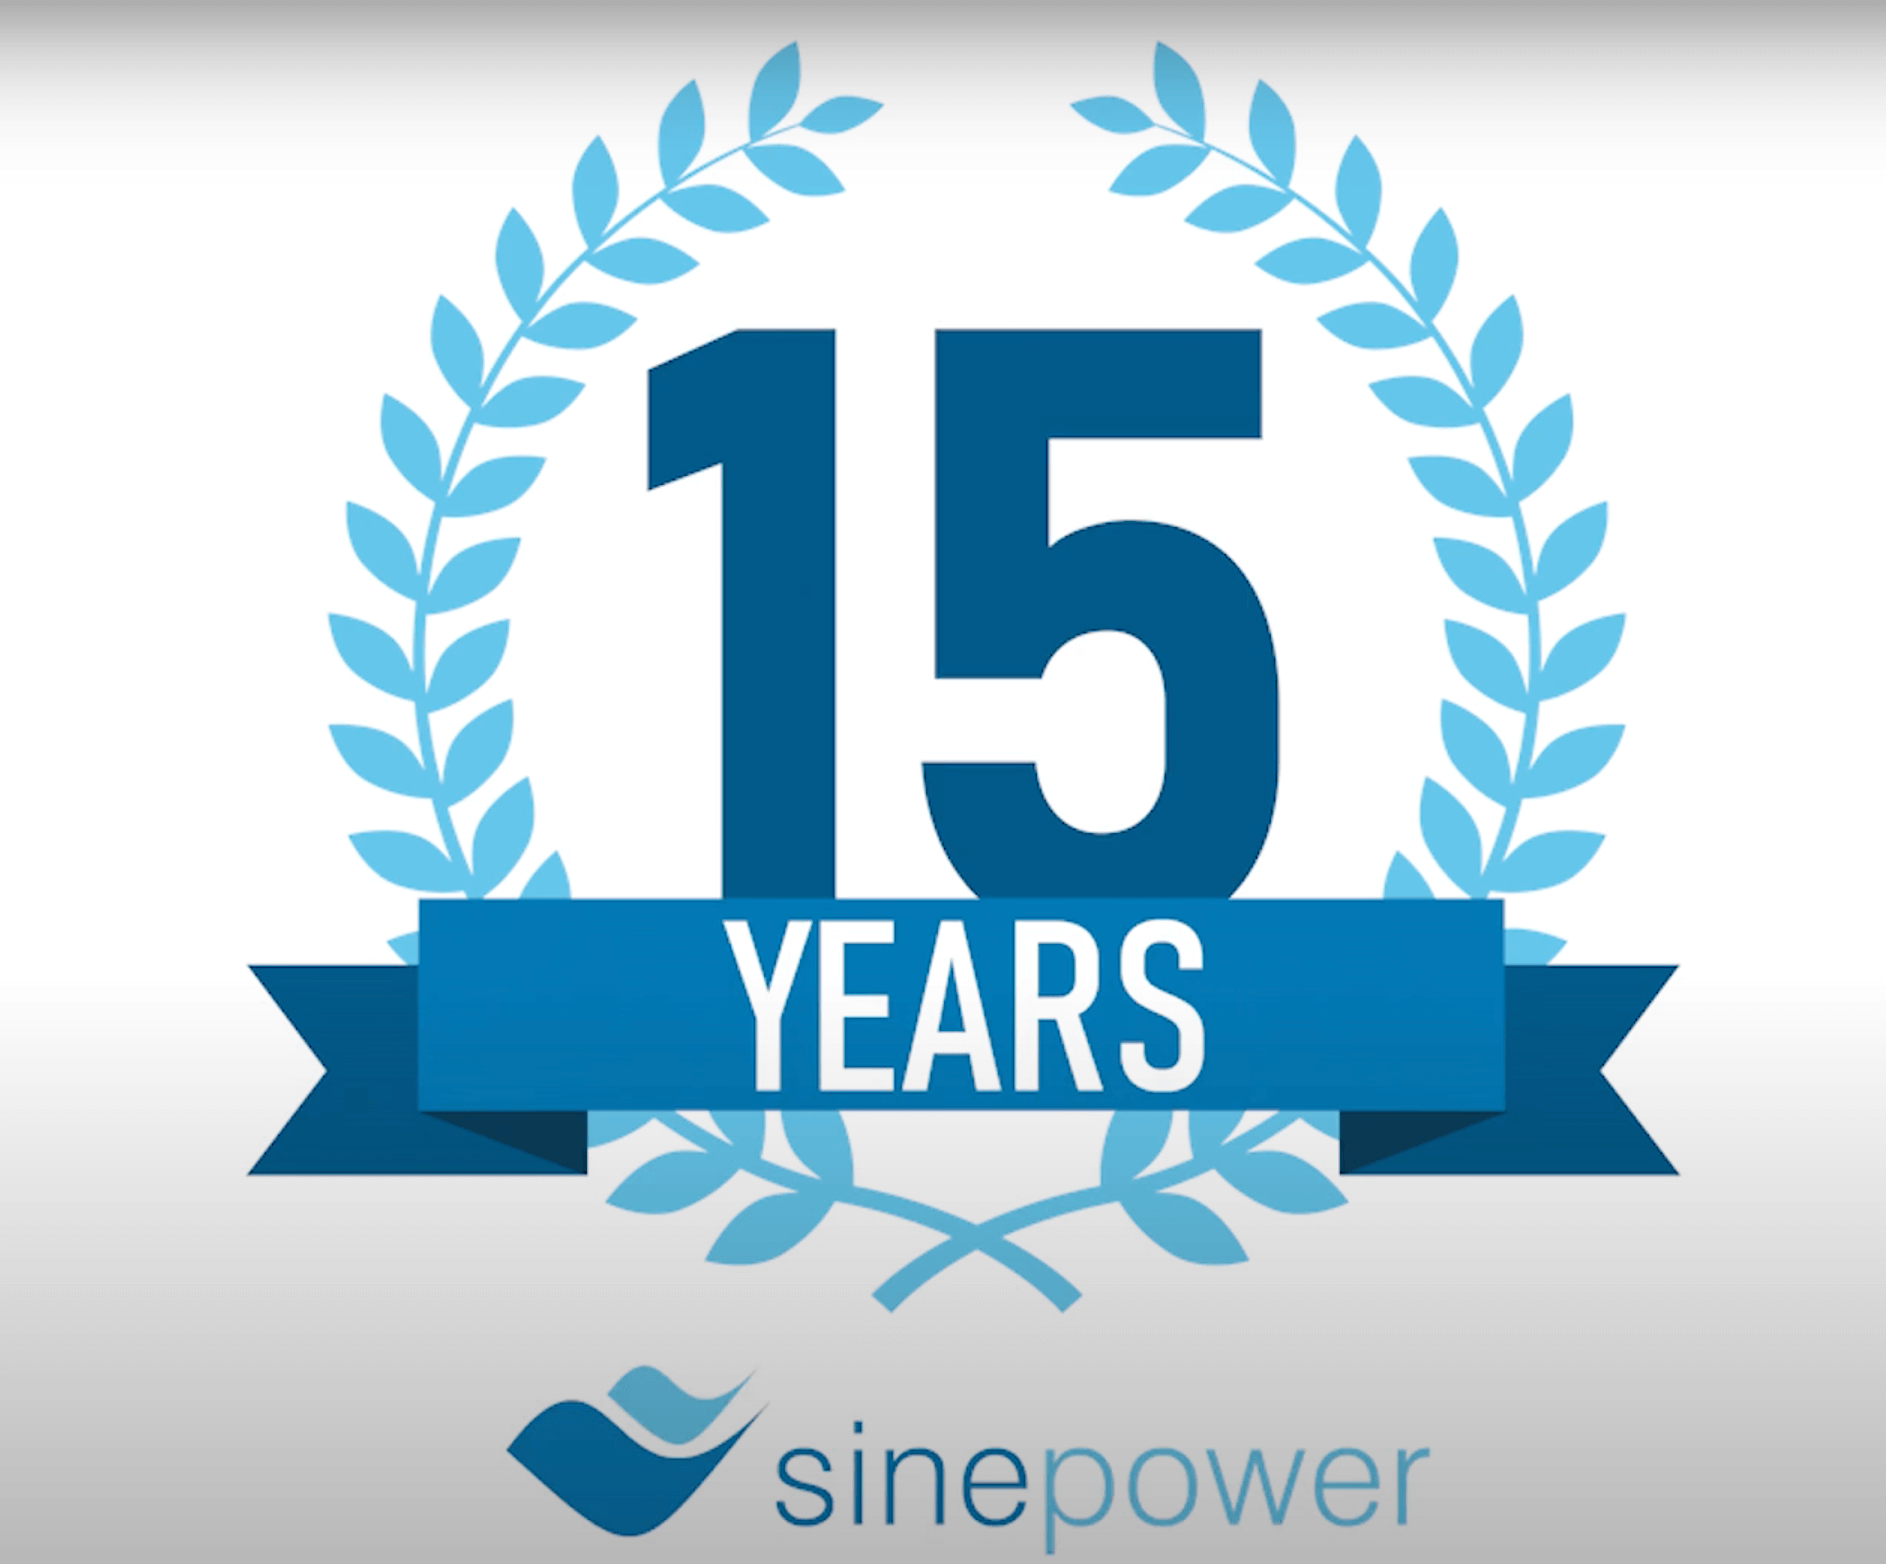 sinepower celebrates 15 years